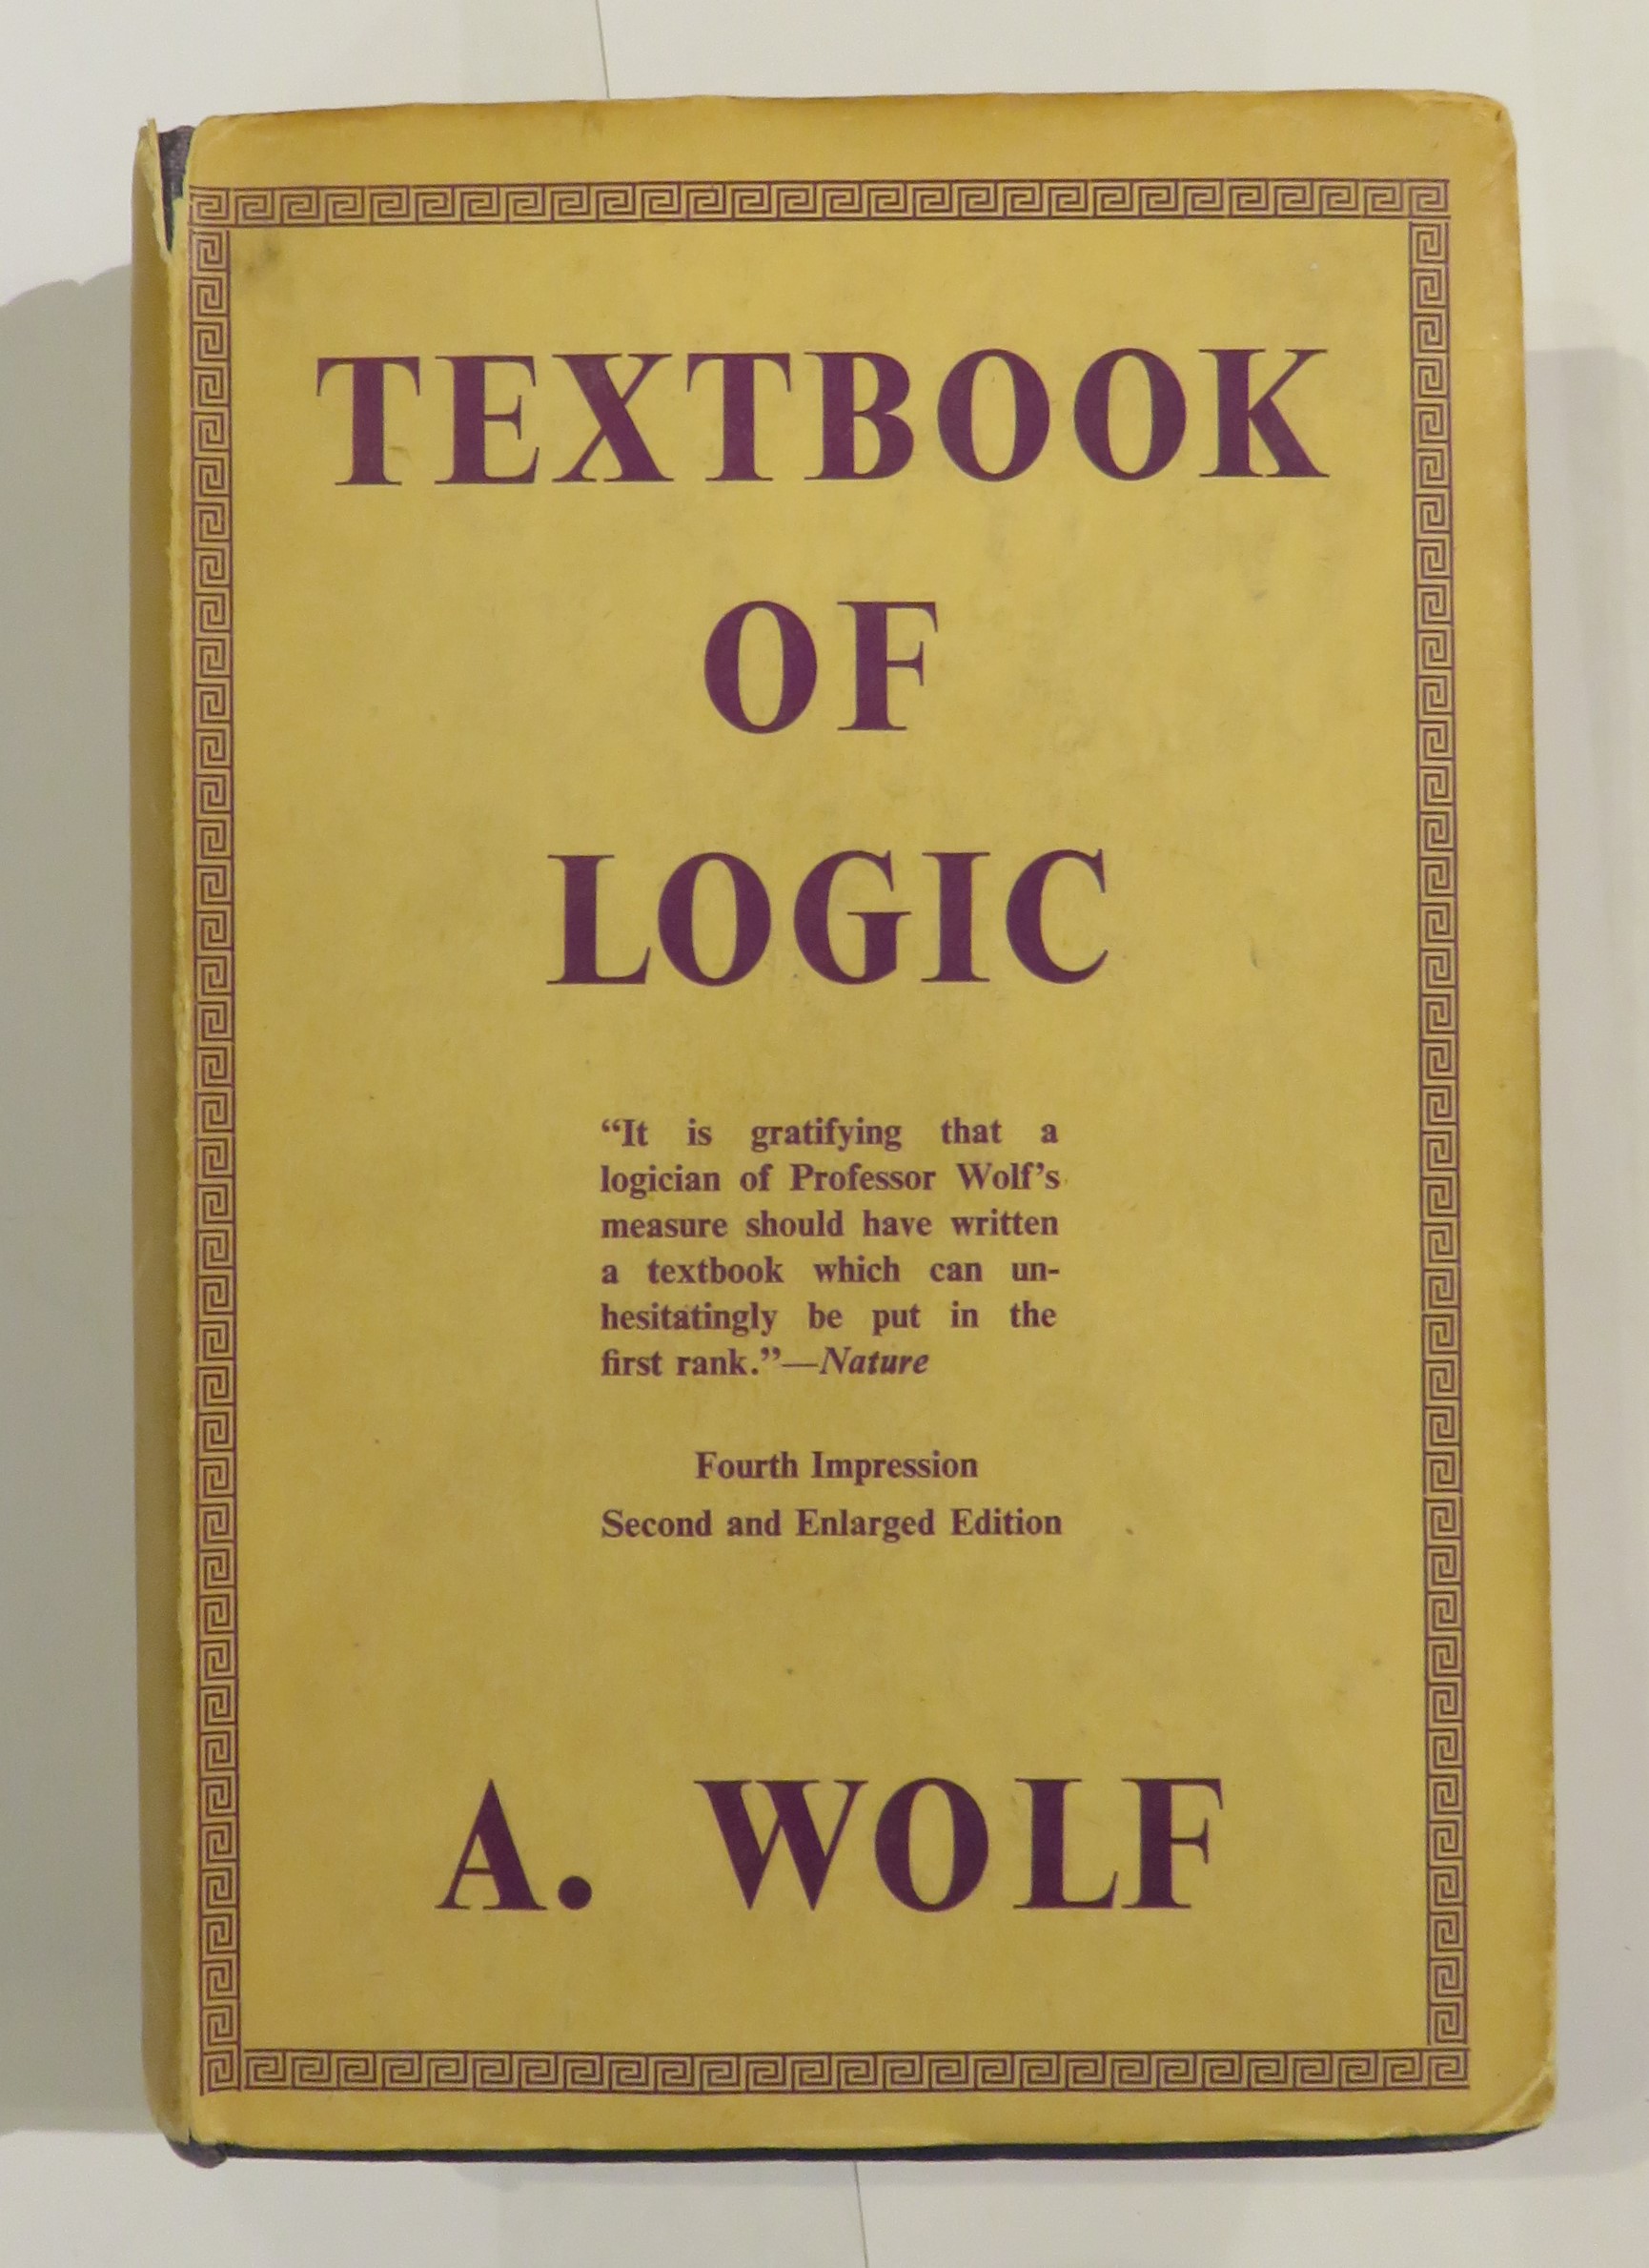 Textbook of Logic 